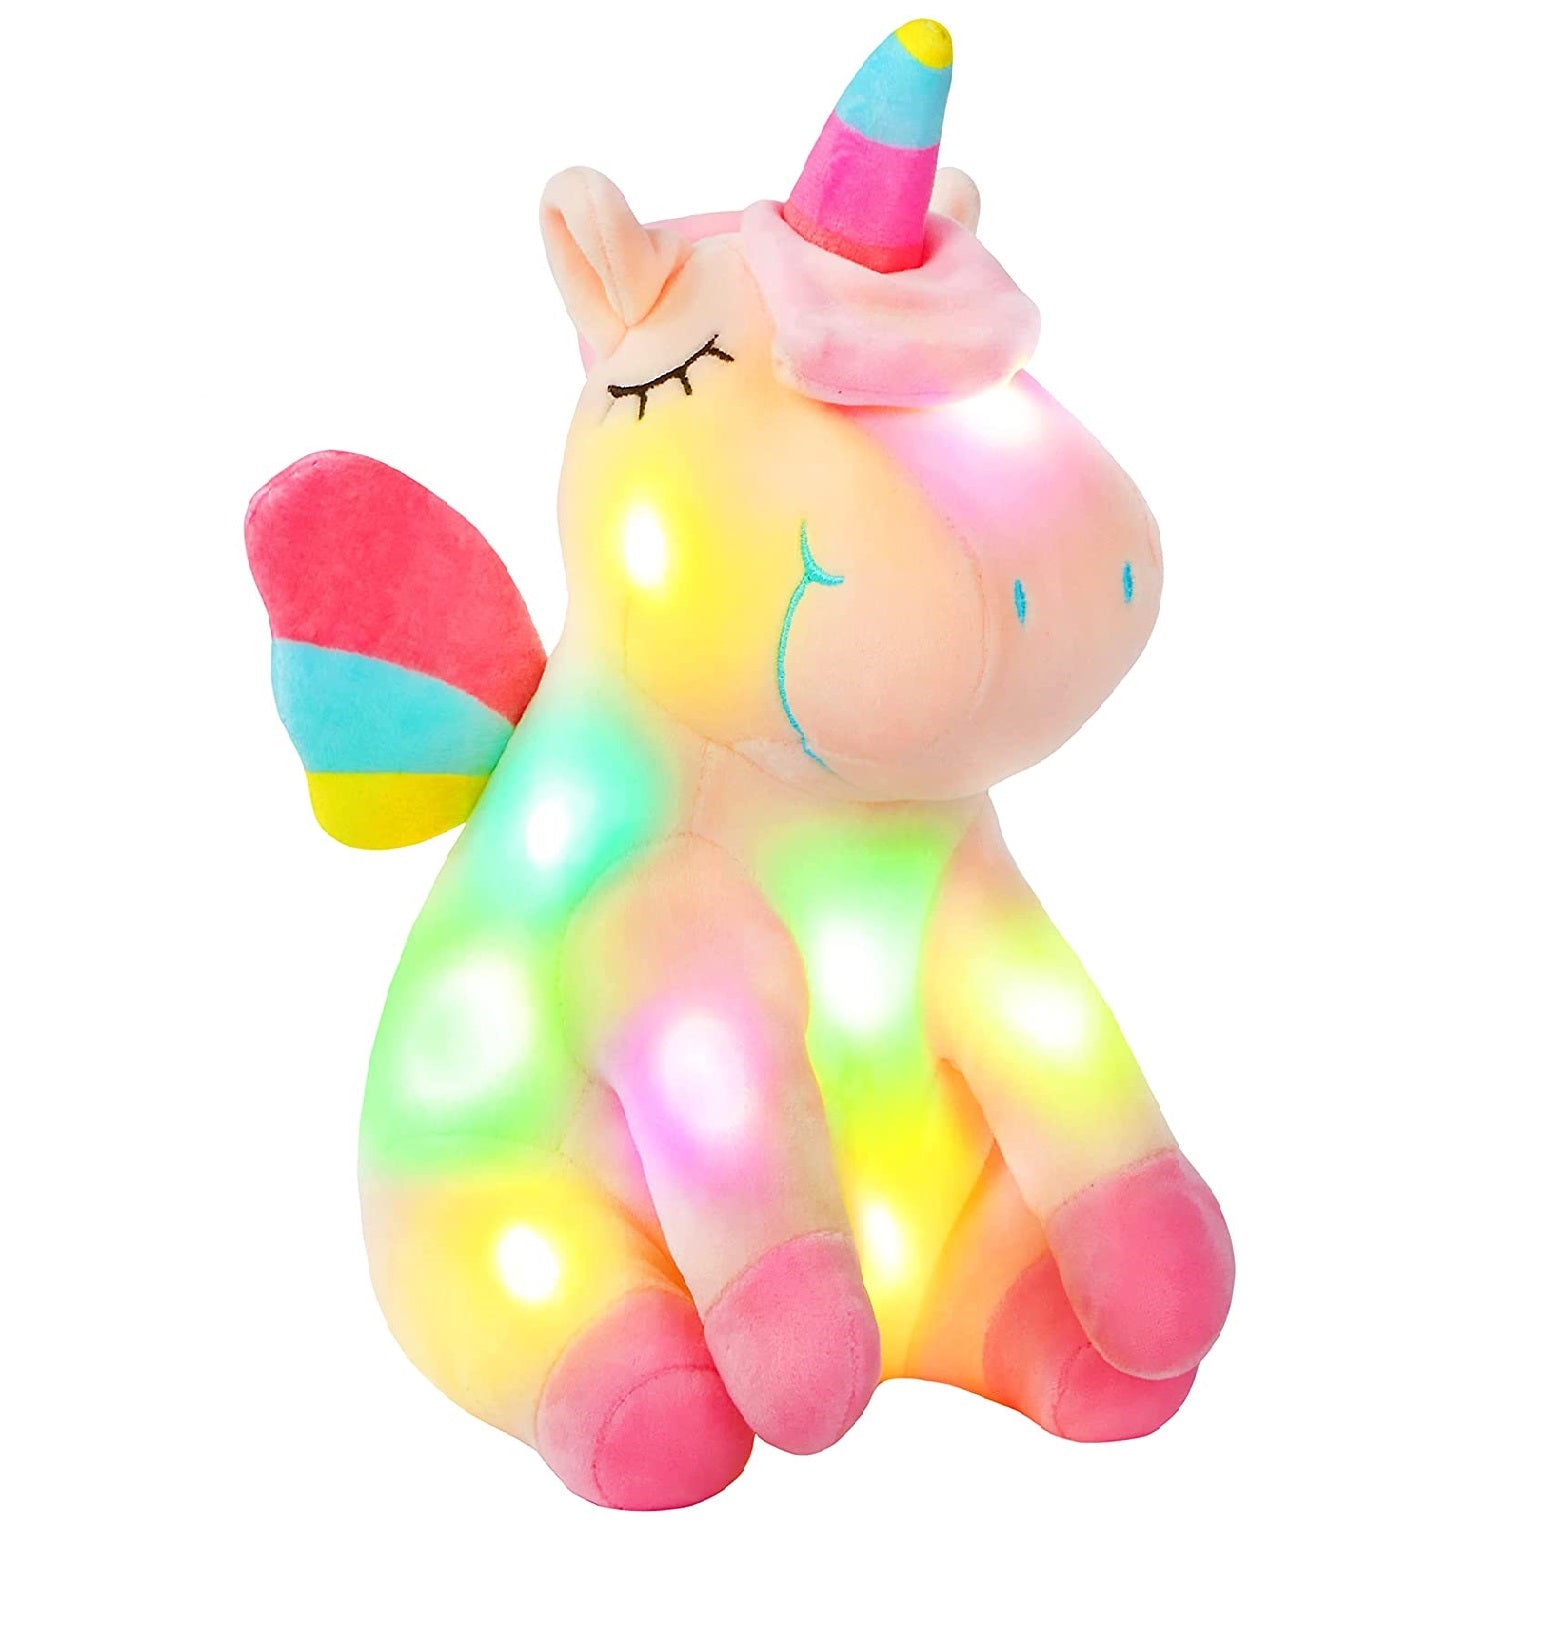 Official GlowBuddy Unicorn